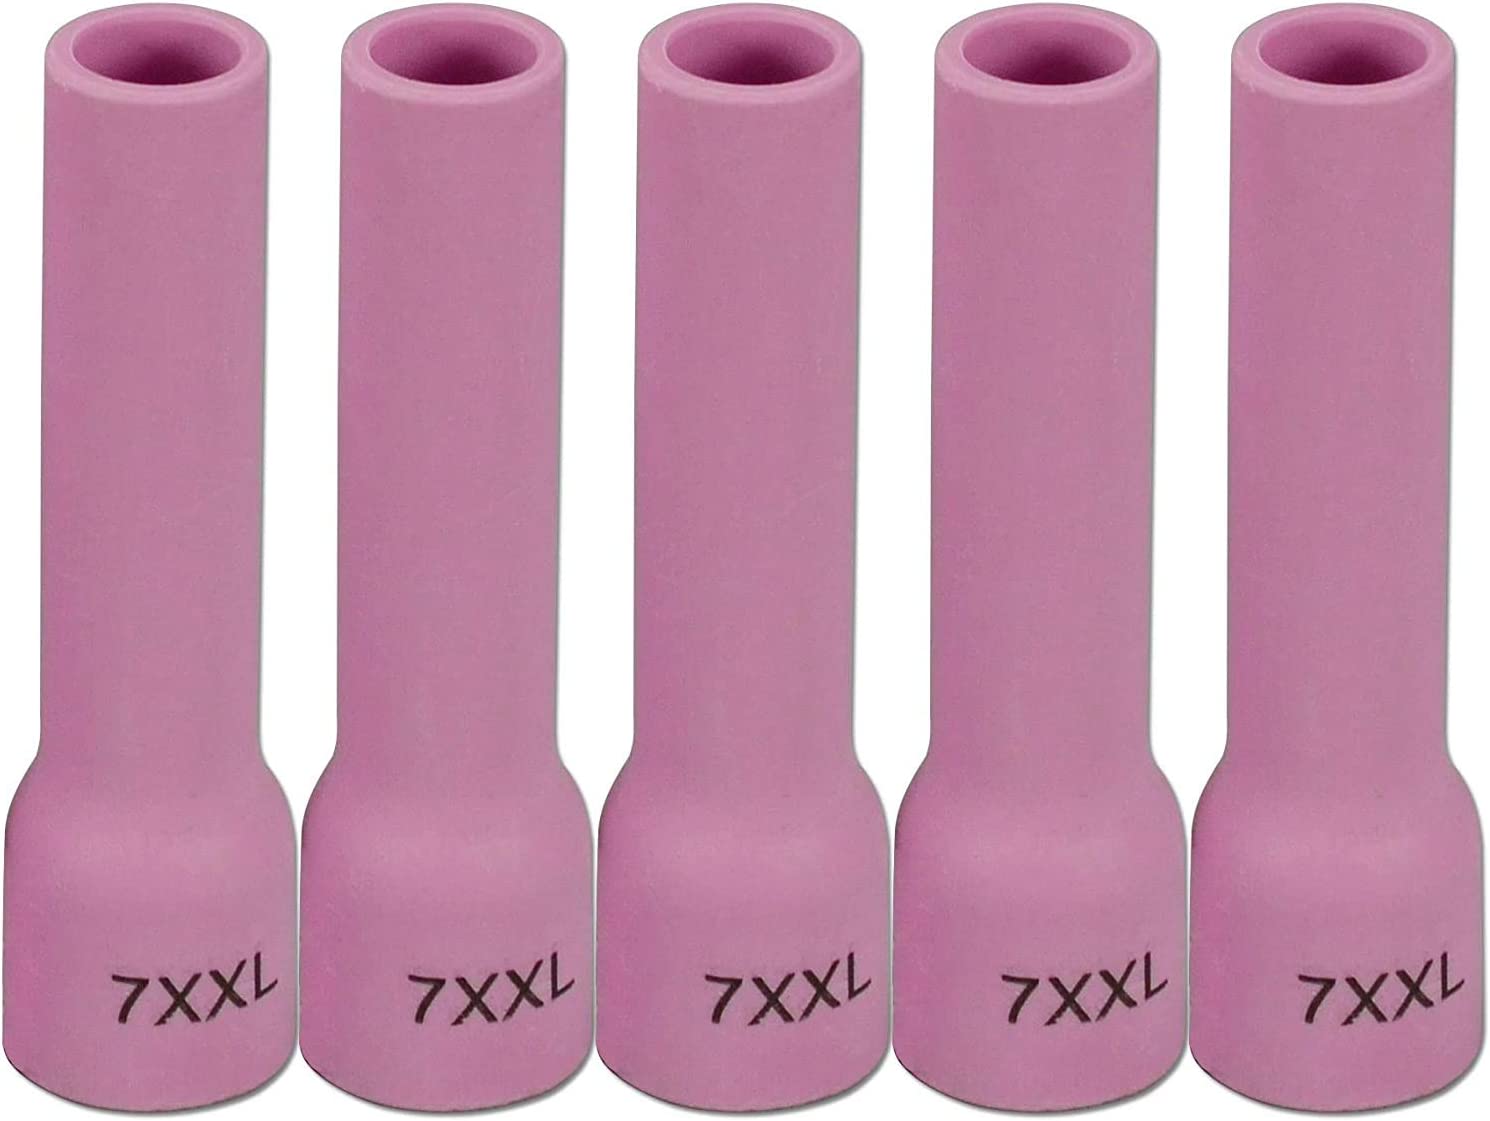 TIG Gas Lens Aluminia Nozzle Ceramic Cup Extra Long 53N61XXL (#7XXL 7/16" Orifice) for SR WP 9 20 25 TIG Welding Torch 5pk 